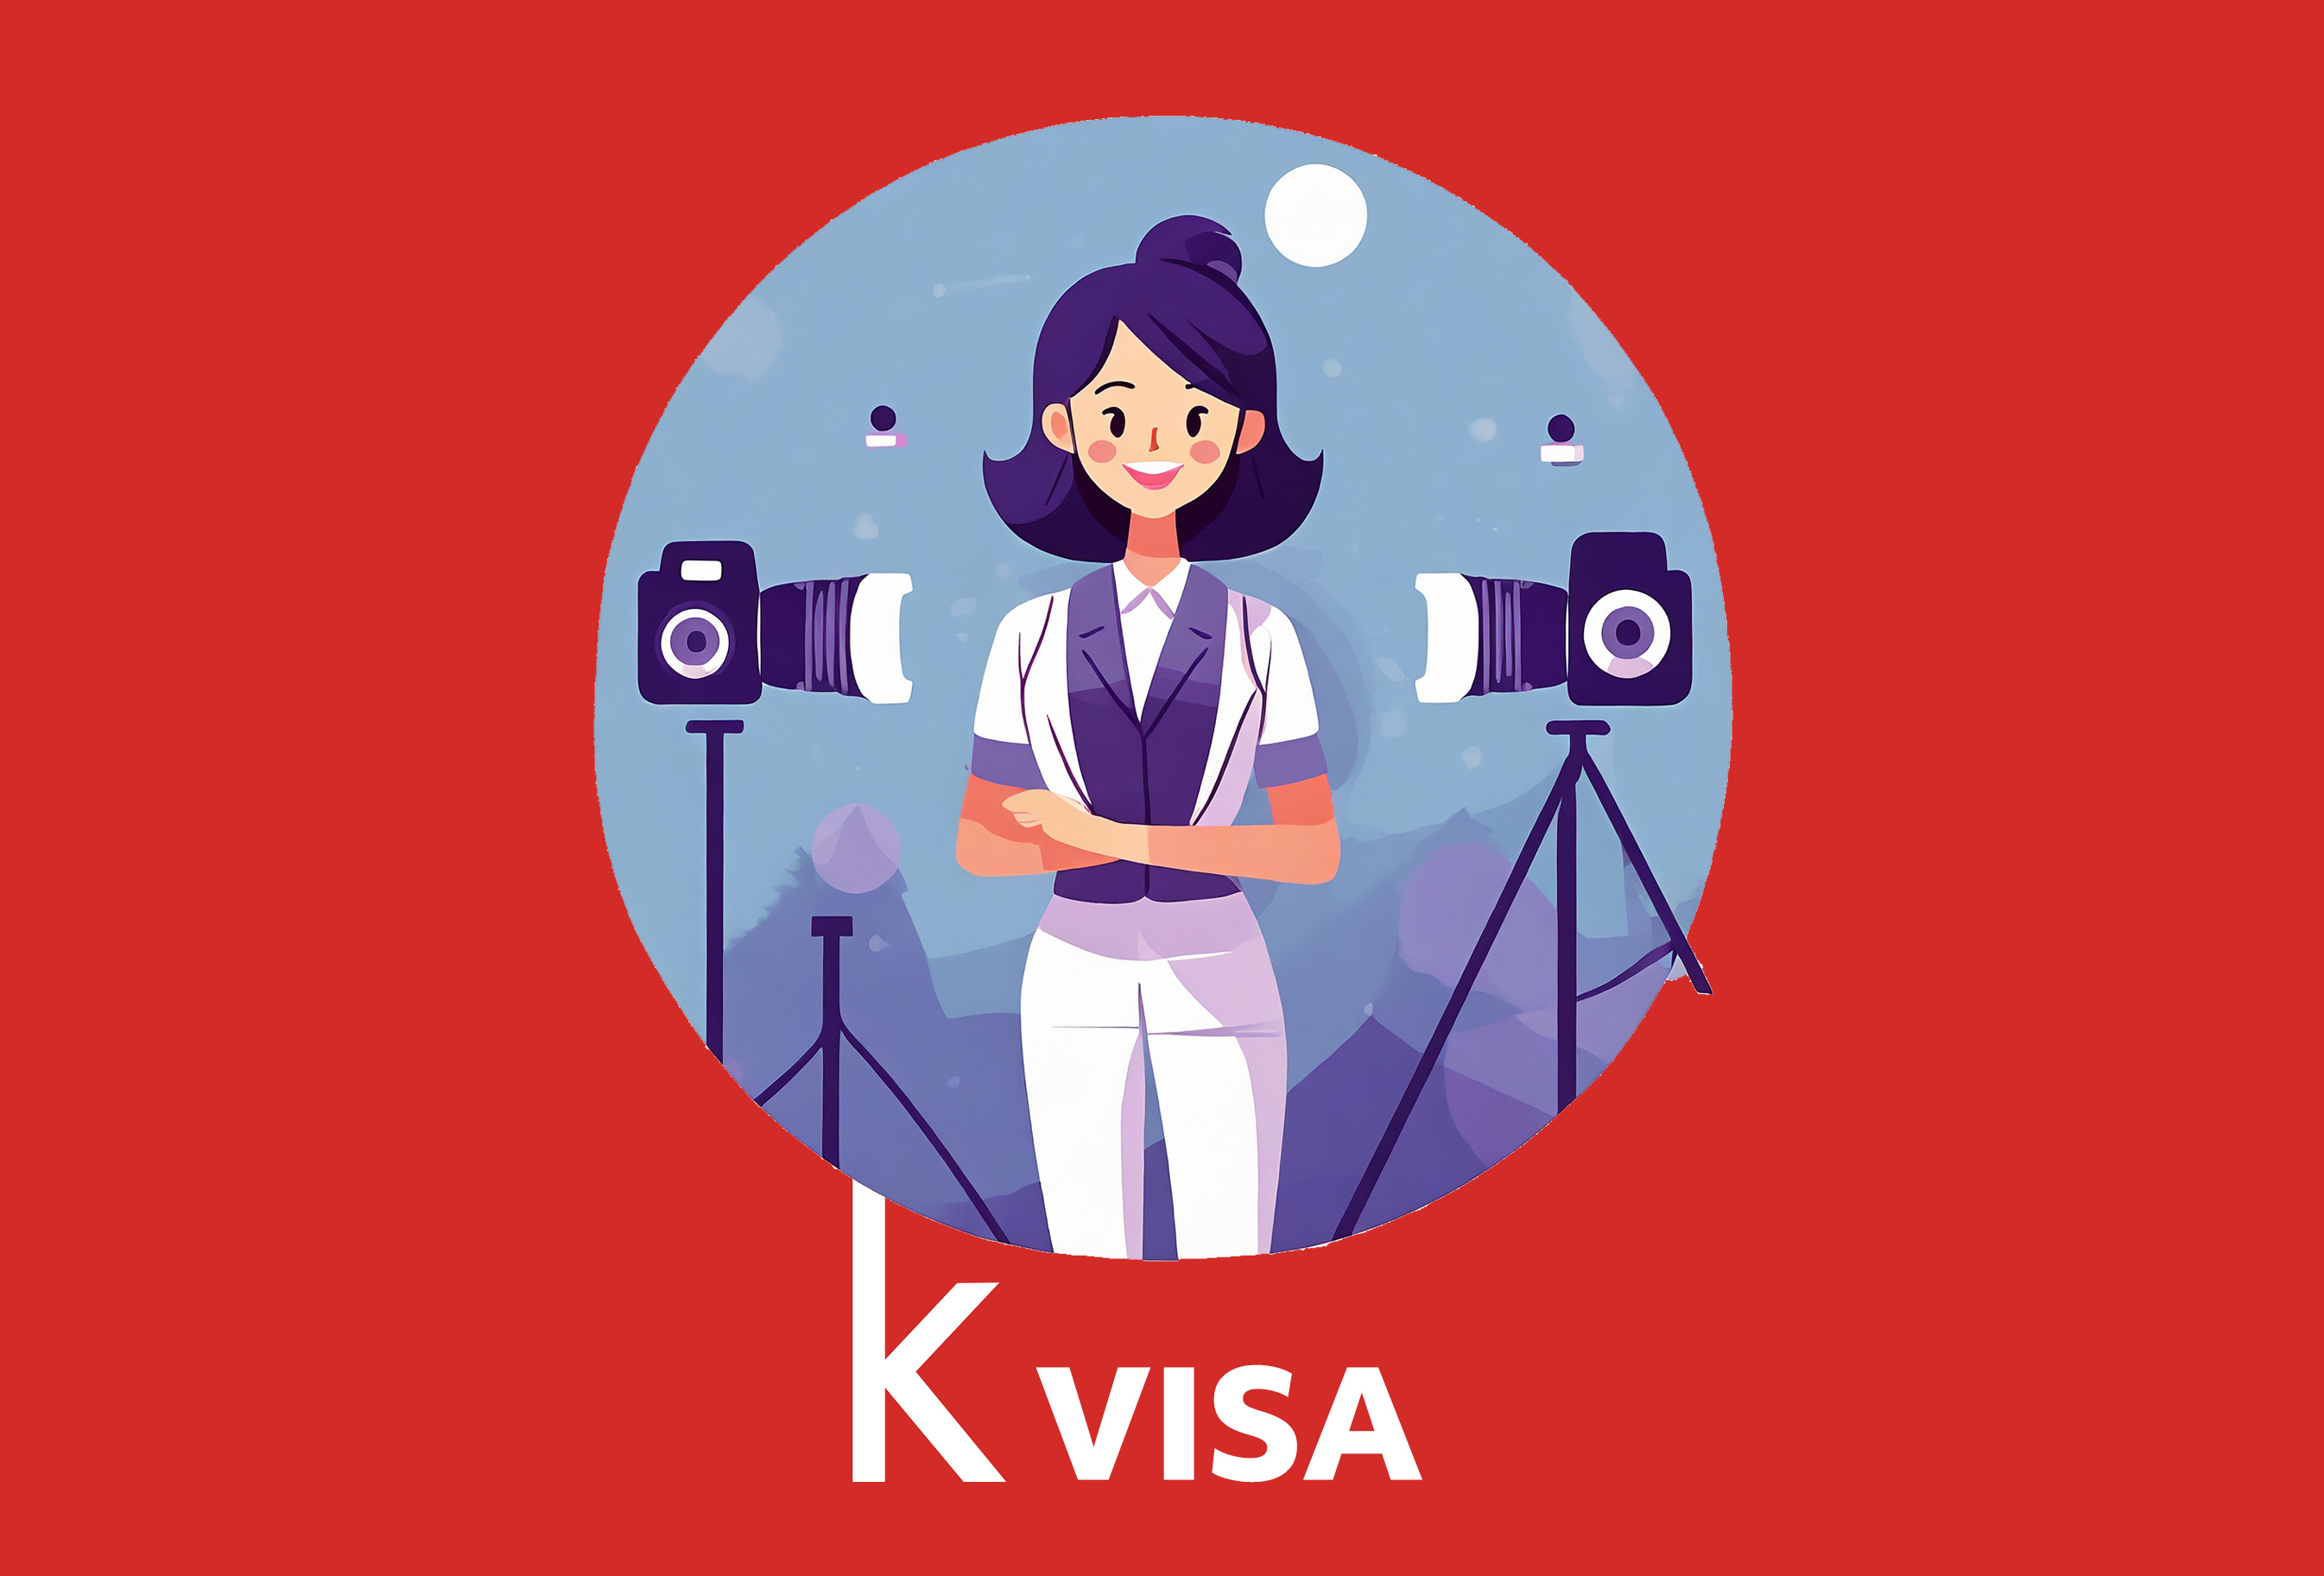 E6 Visa profile.jpg